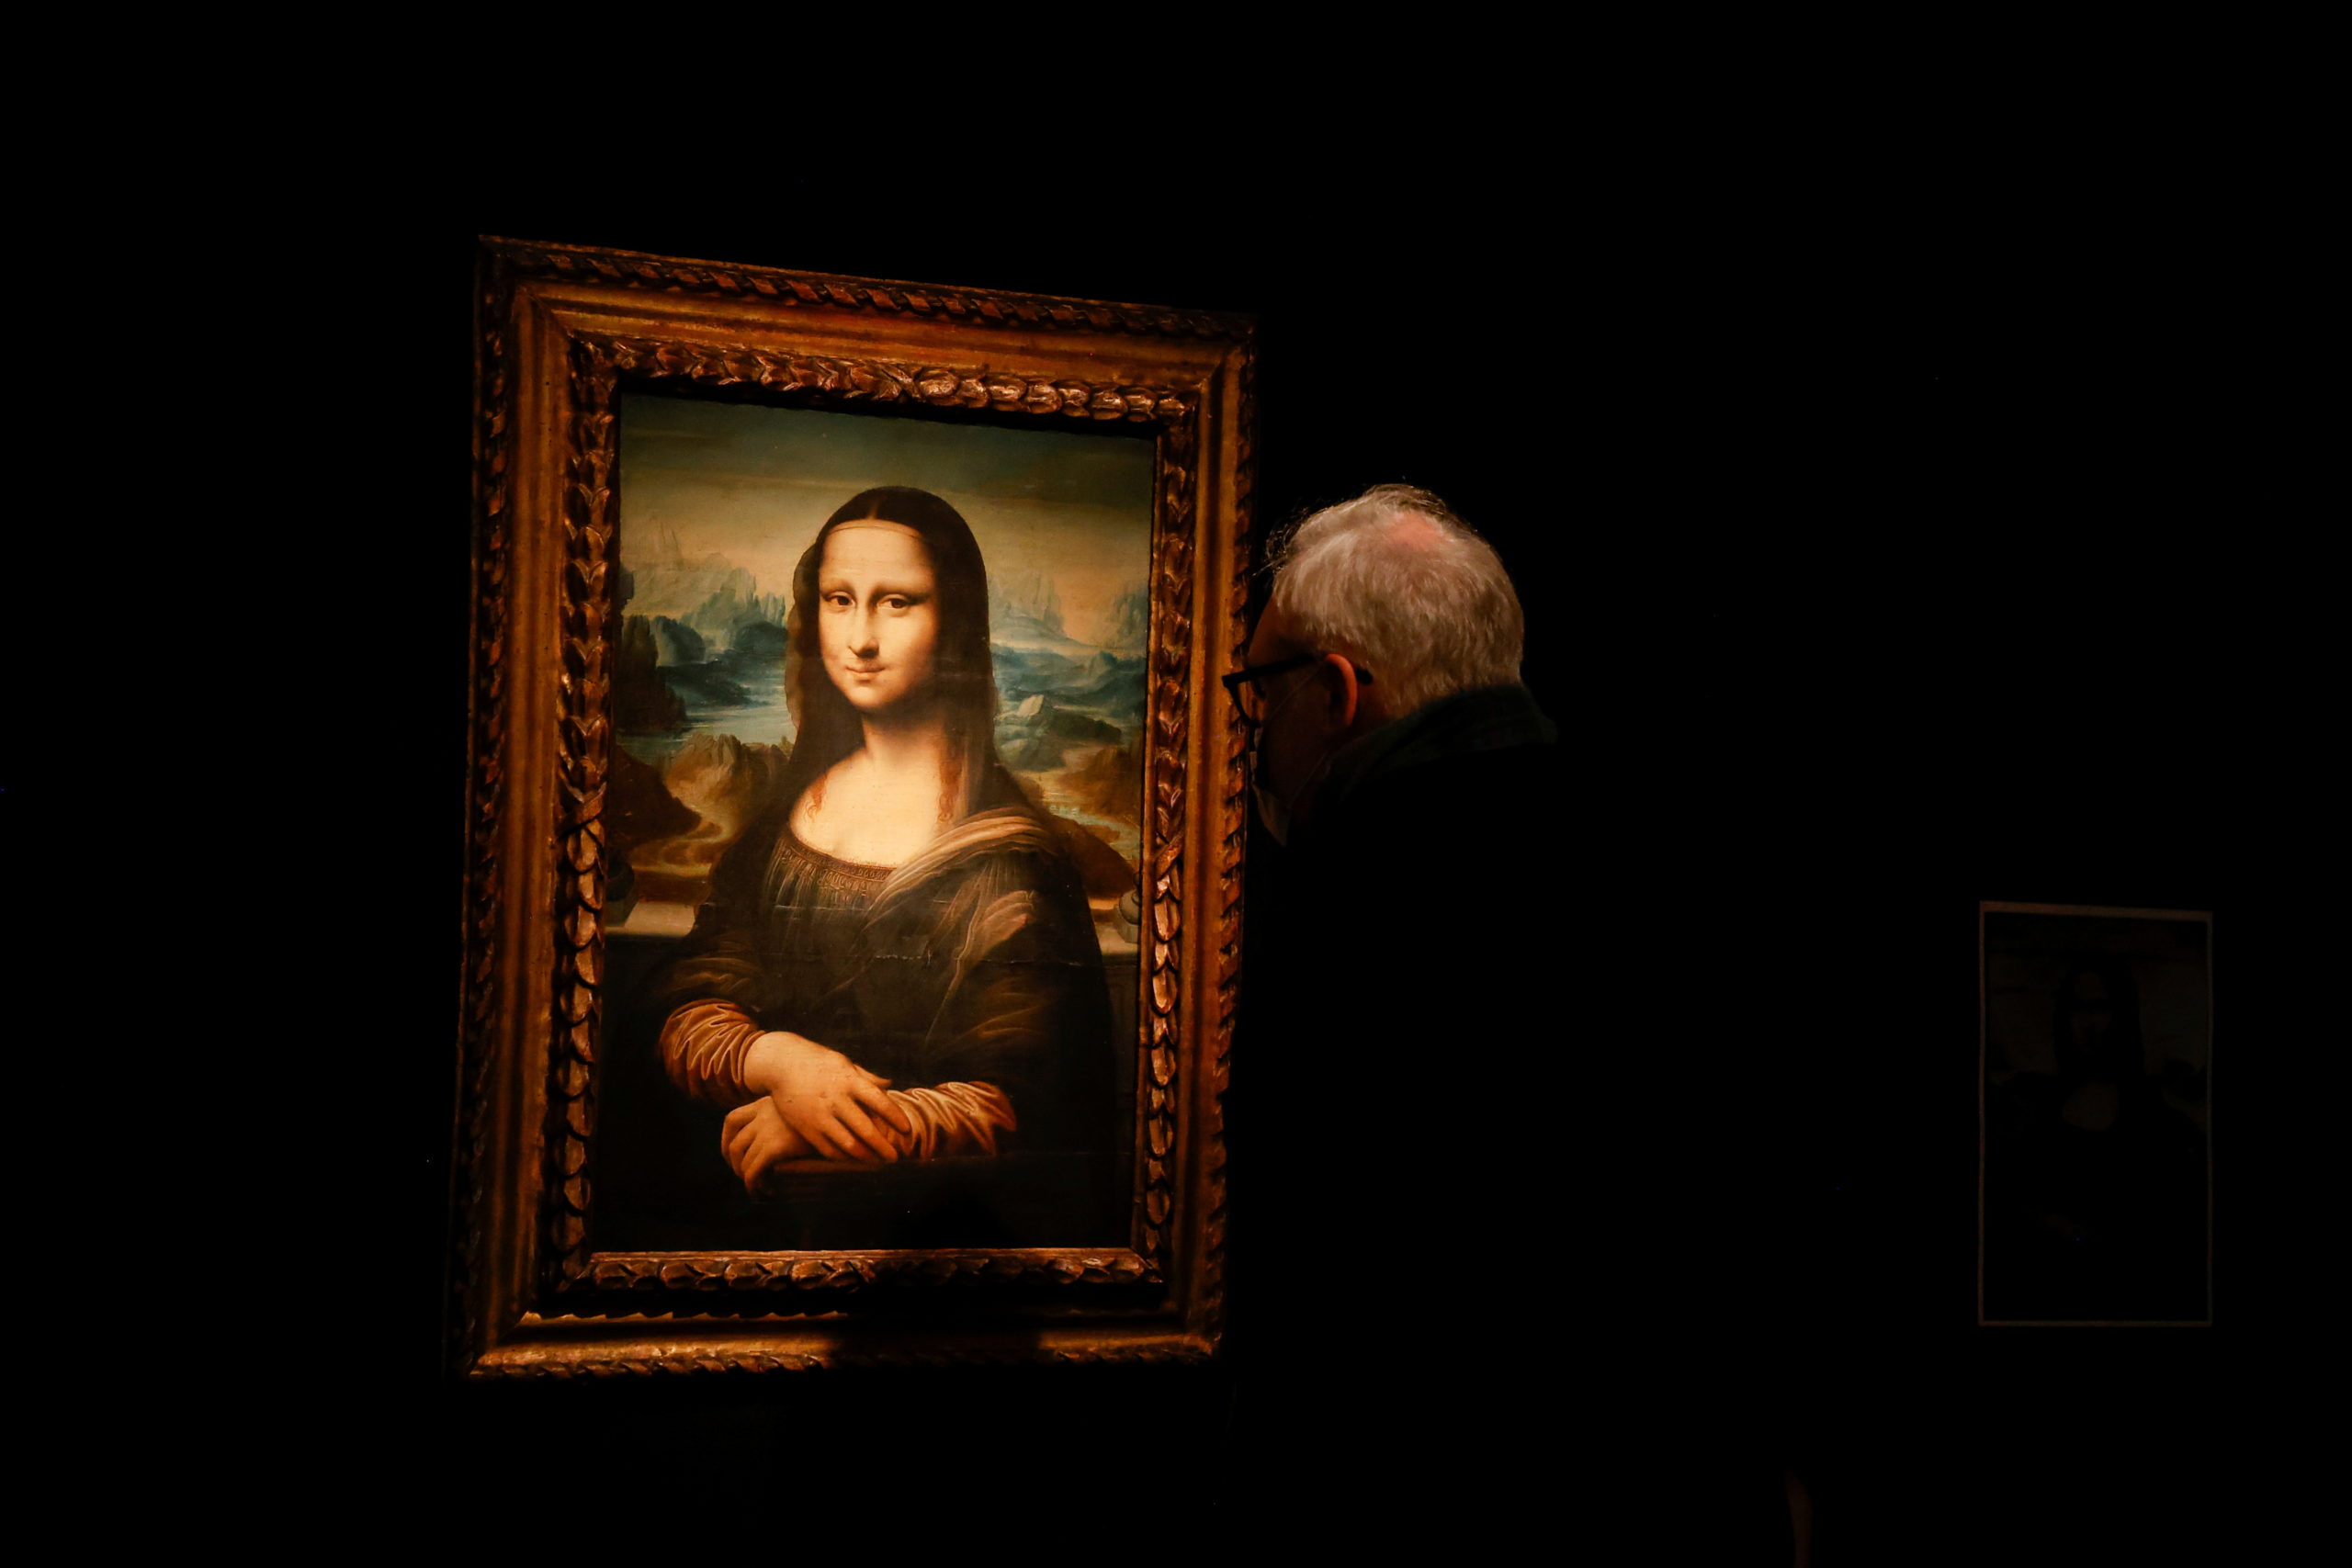 A Mona Lisa copy sells for $242,000